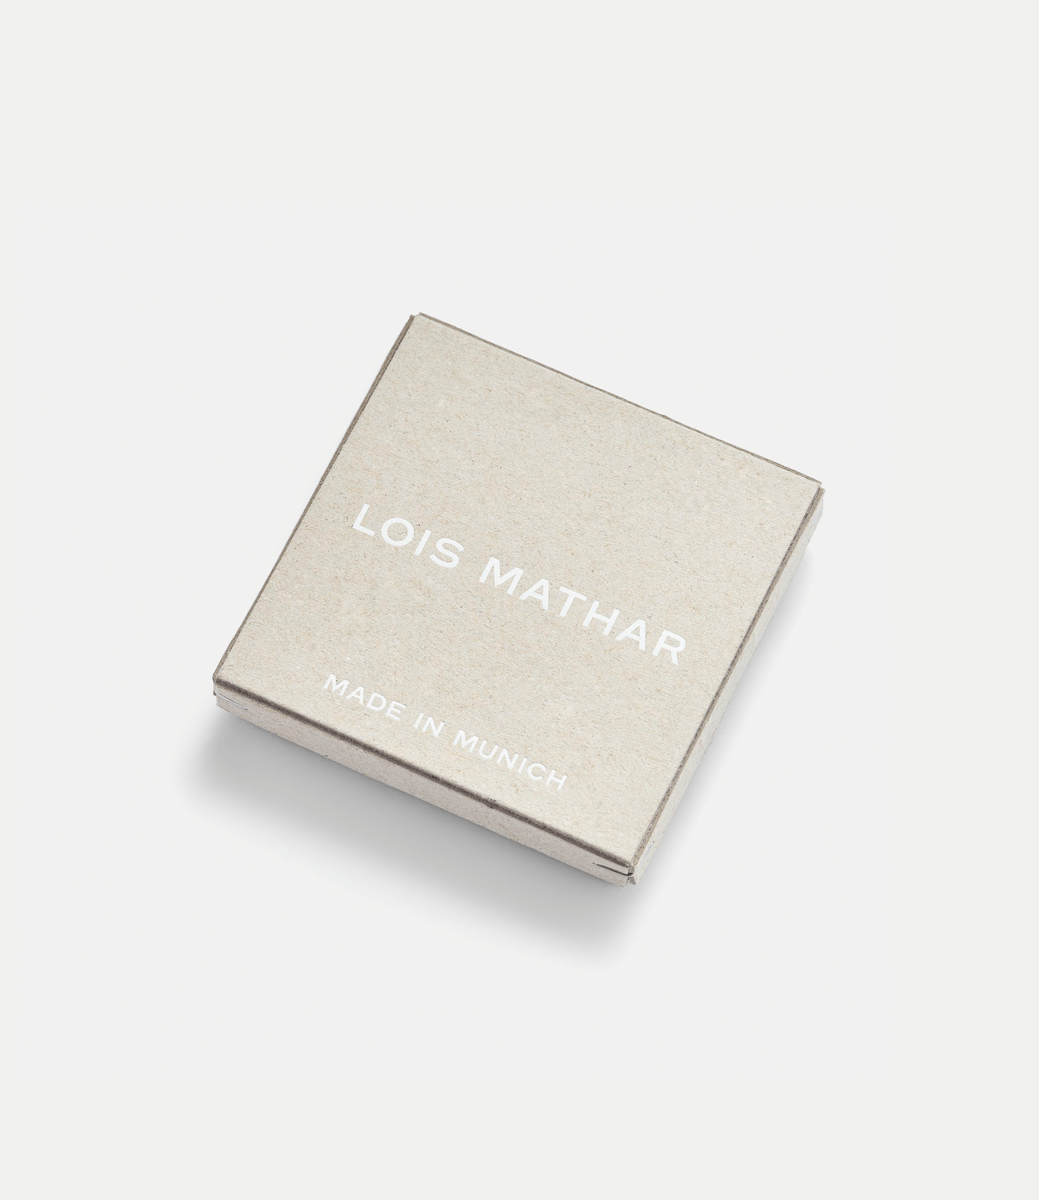 Lois Mathar The 001 Series Brass Thin — браслет из латуни